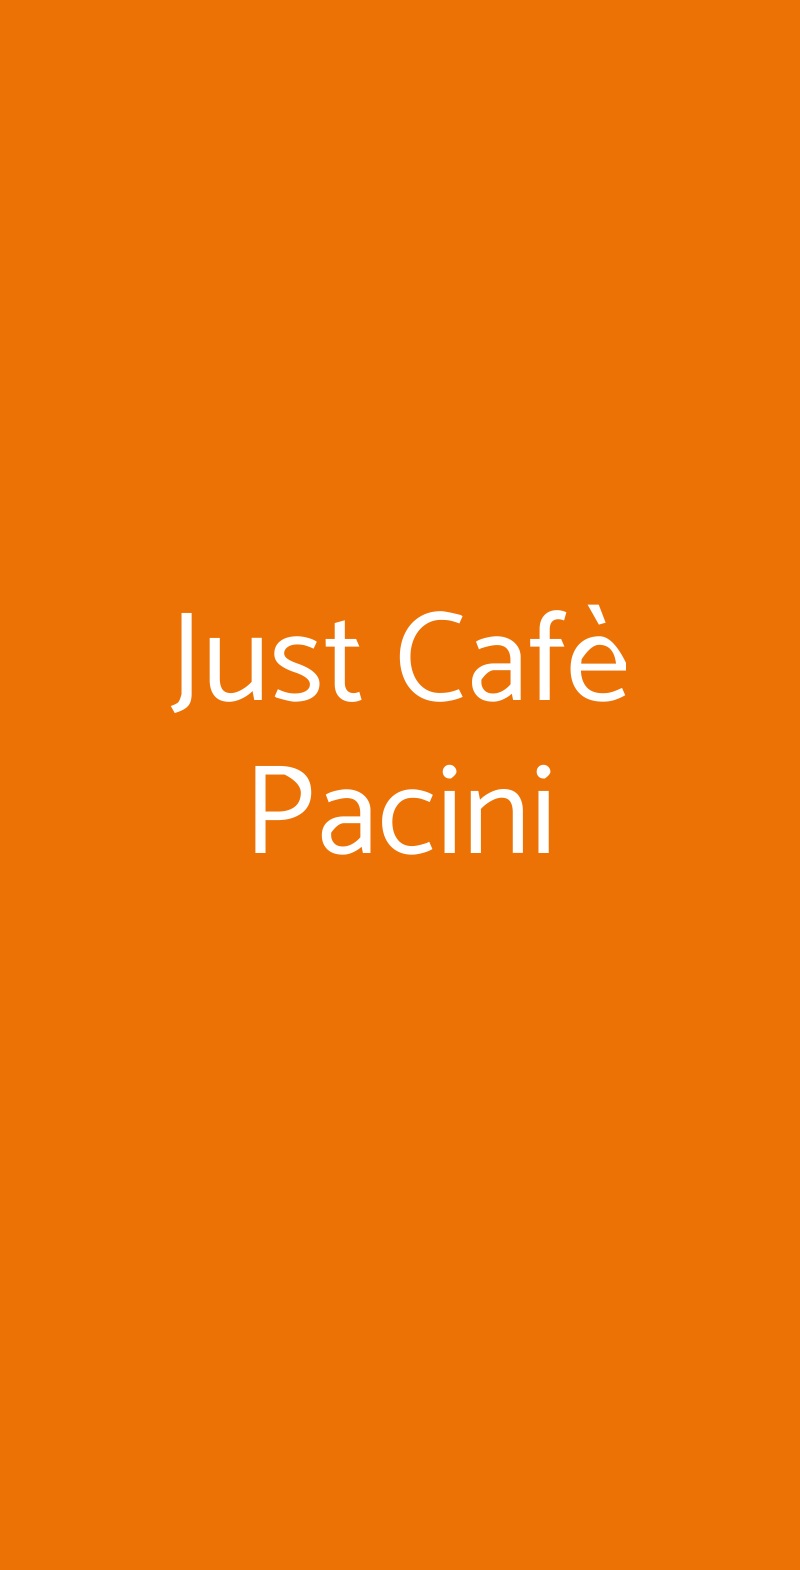 Just Cafè Pacini Milano menù 1 pagina